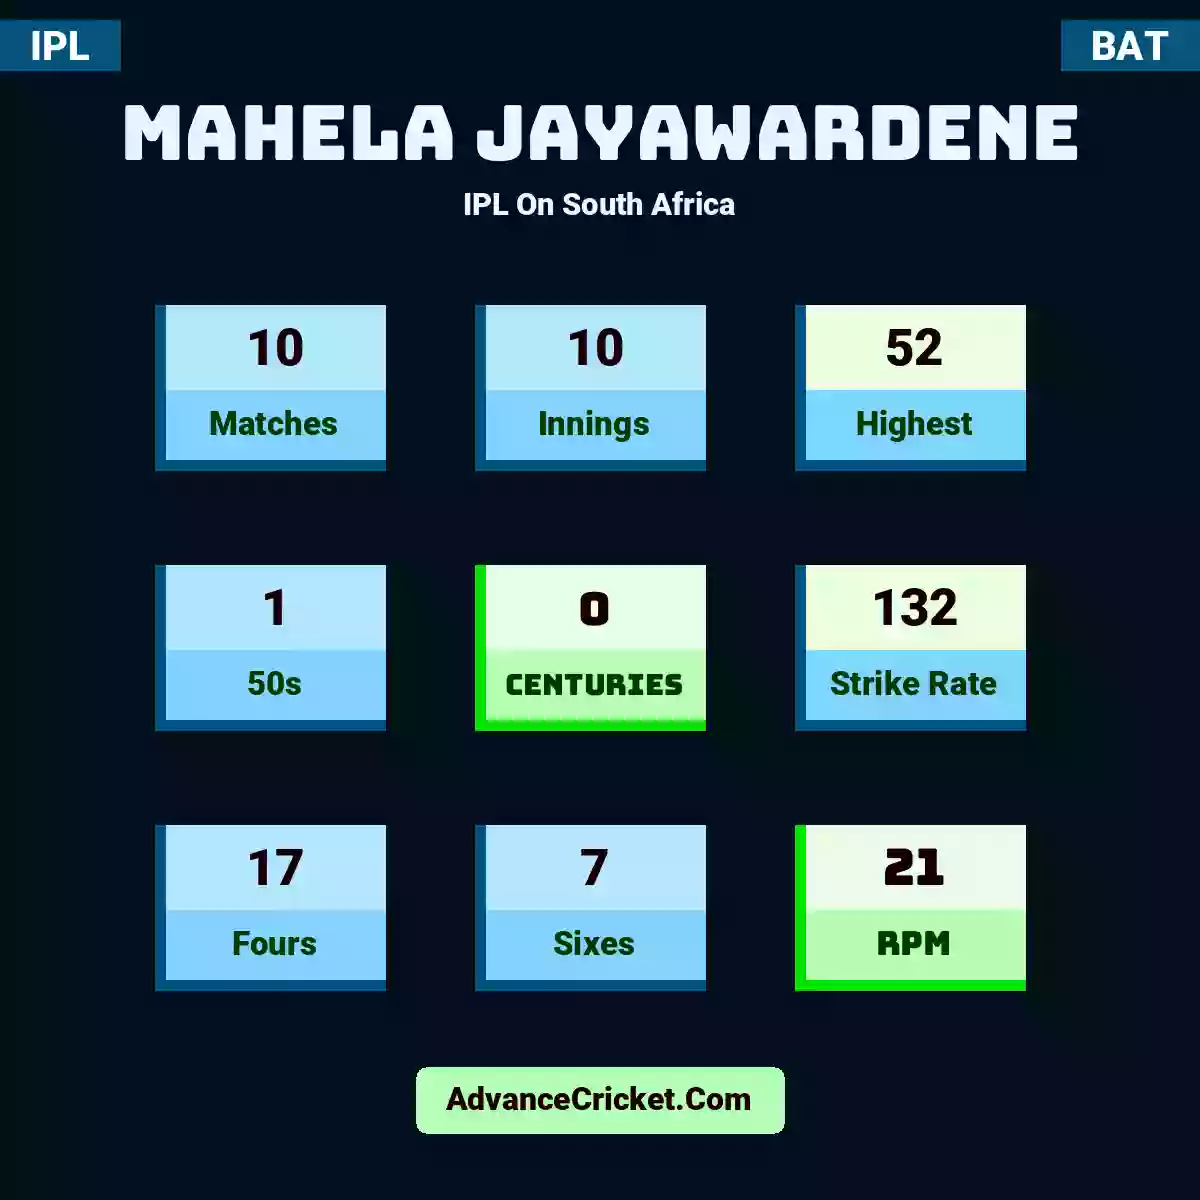 Mahela Jayawardene IPL  On South Africa, Mahela Jayawardene played 10 matches, scored 52 runs as highest, 1 half-centuries, and 0 centuries, with a strike rate of 132. M.Jayawardene hit 17 fours and 7 sixes, with an RPM of 21.